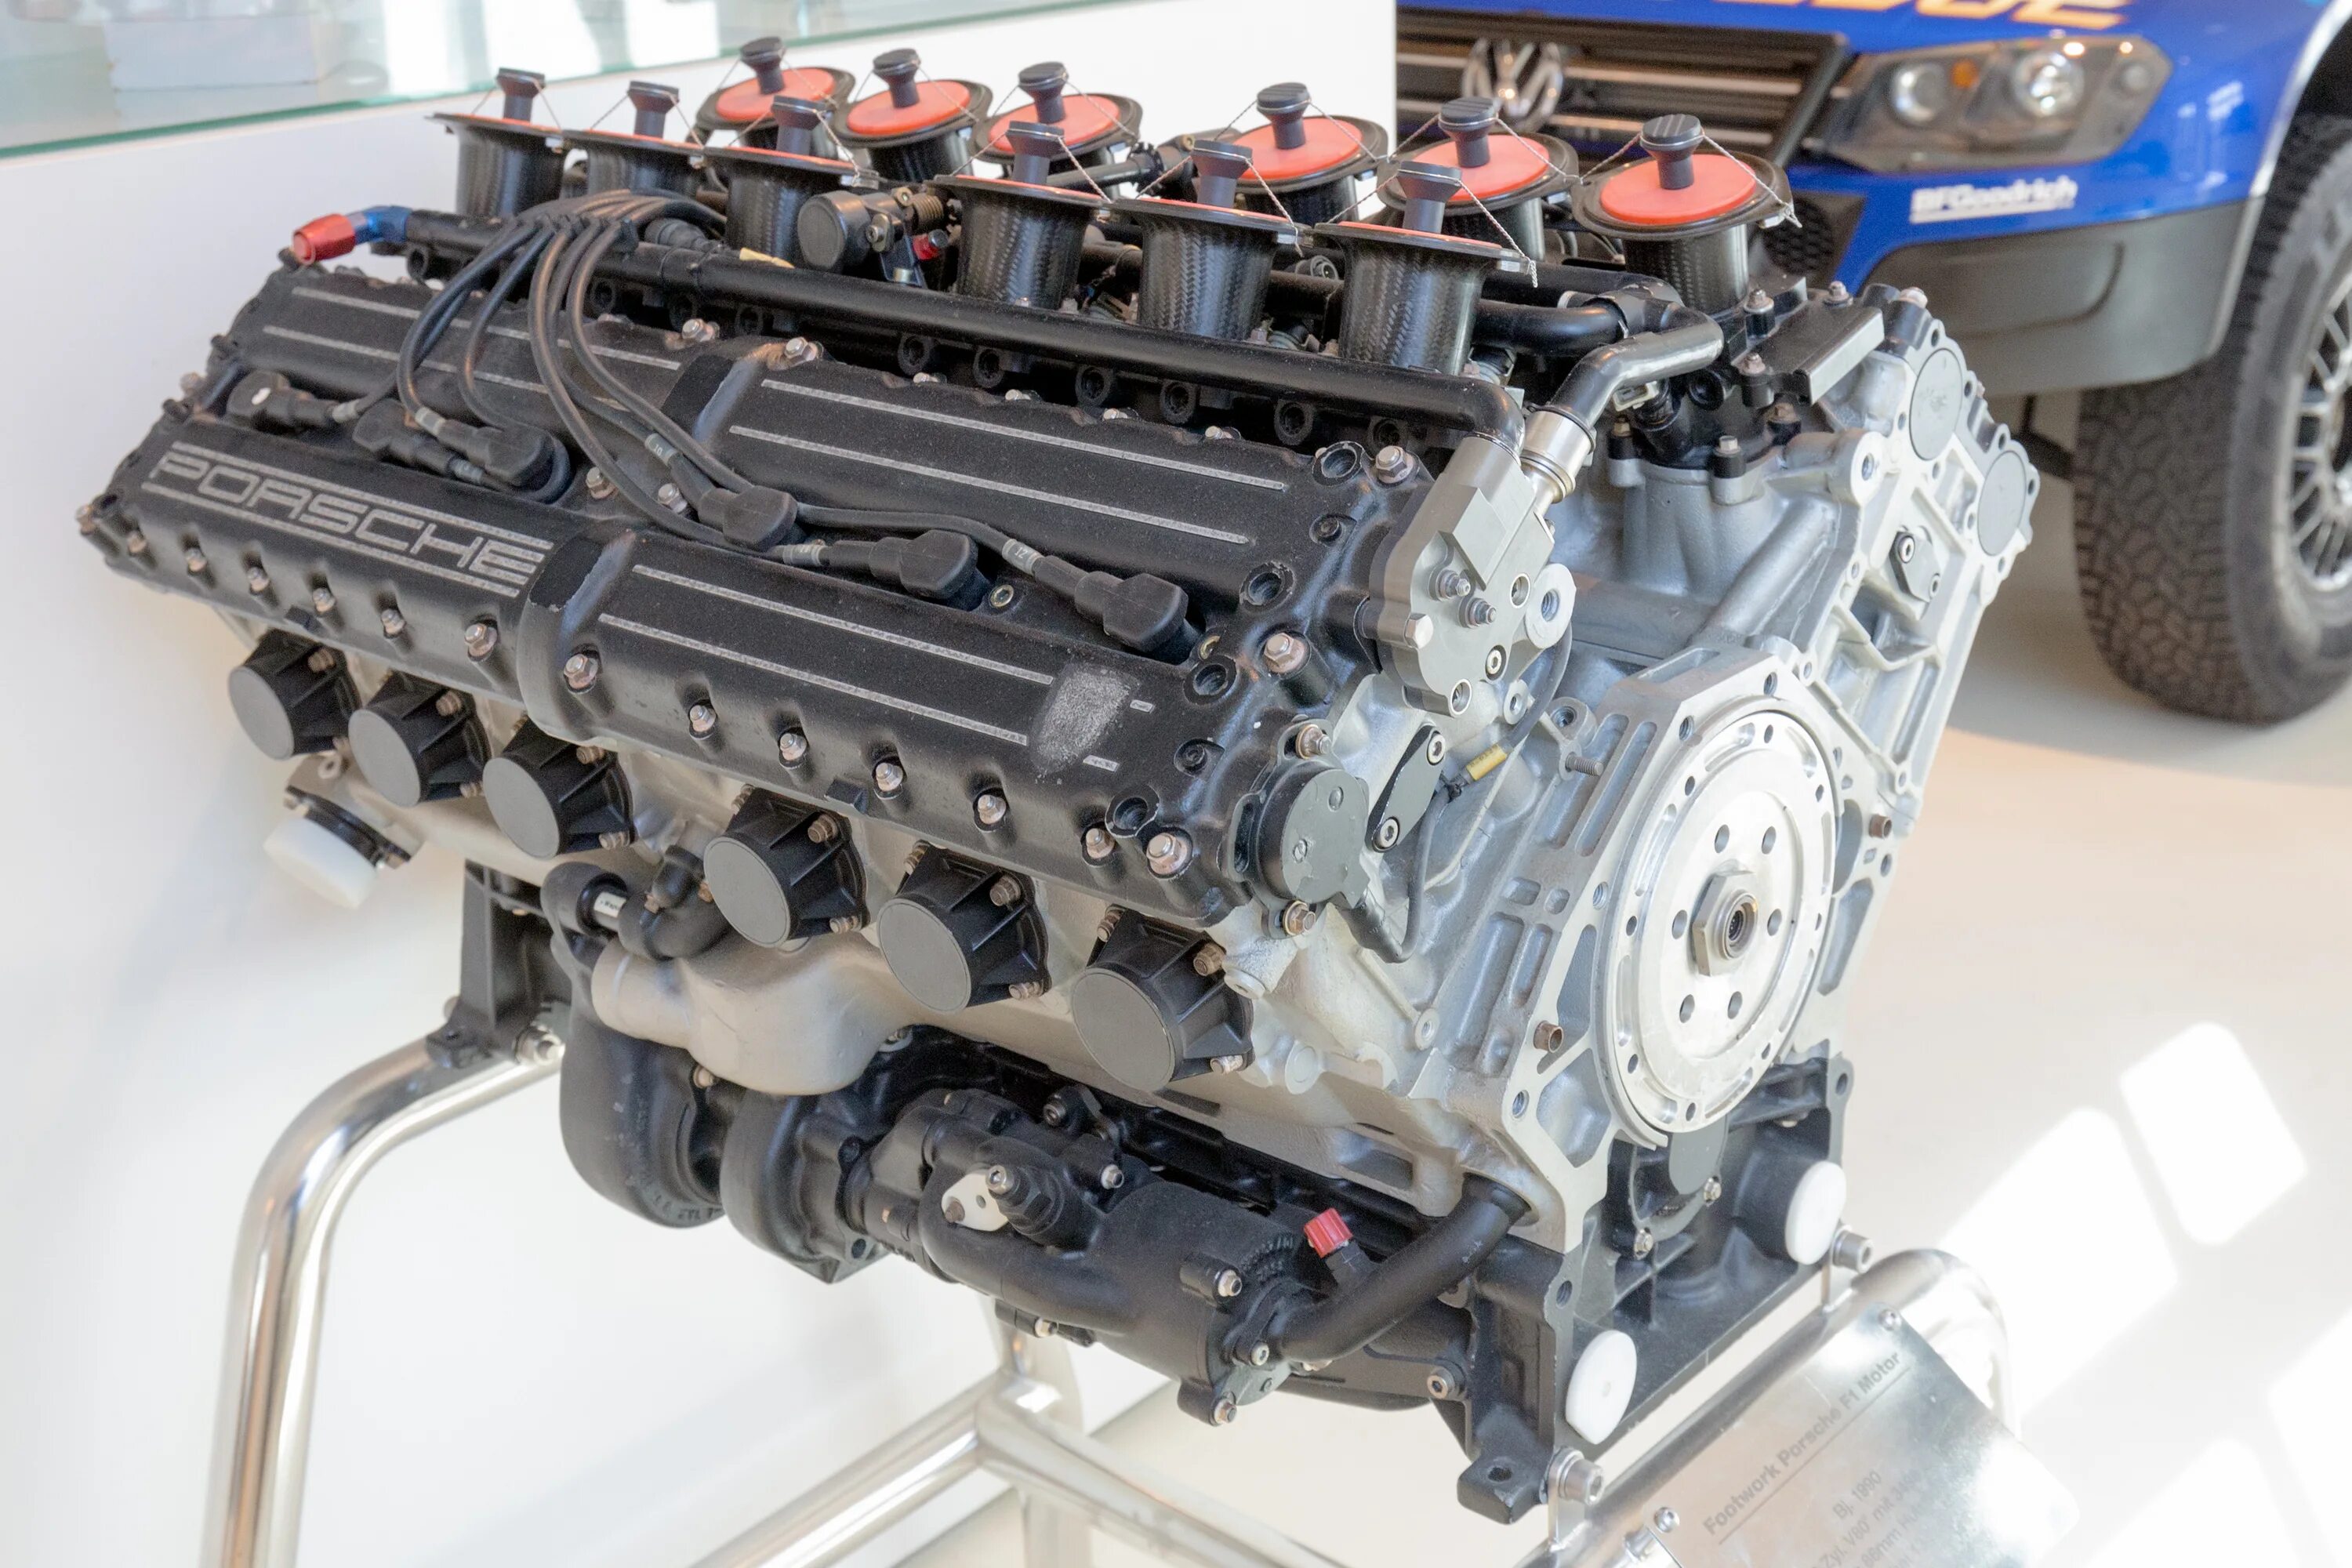 12 двиг. V12 двигатель. 6 Цилиндровый v12. Porsche с мотором v12. BMW v12 engine.